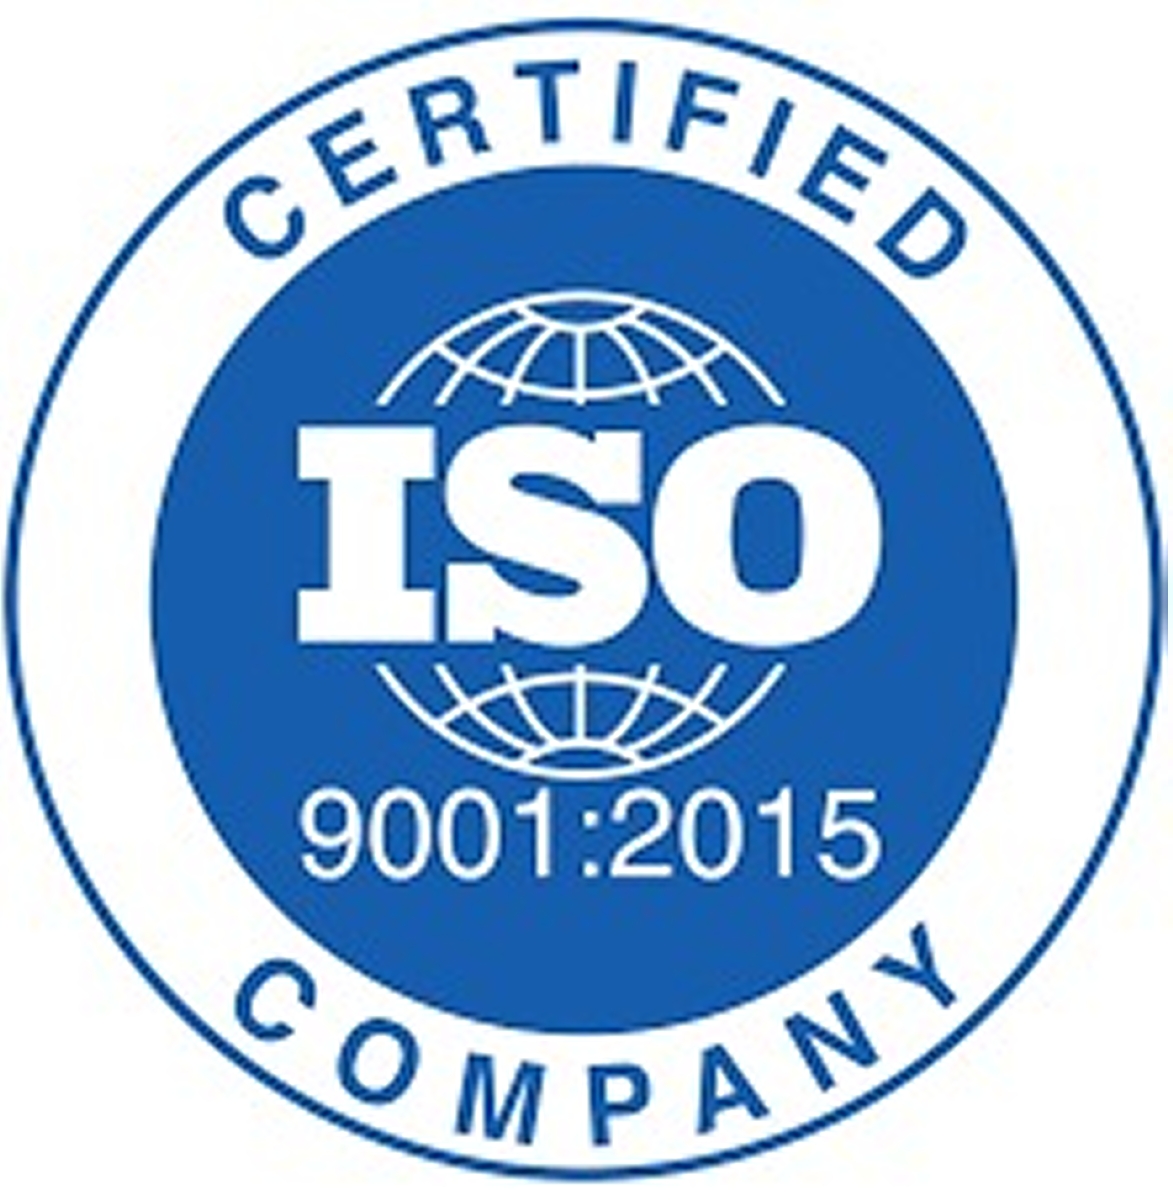 MULTIAX obtient la certification ISO 9001 : 2015